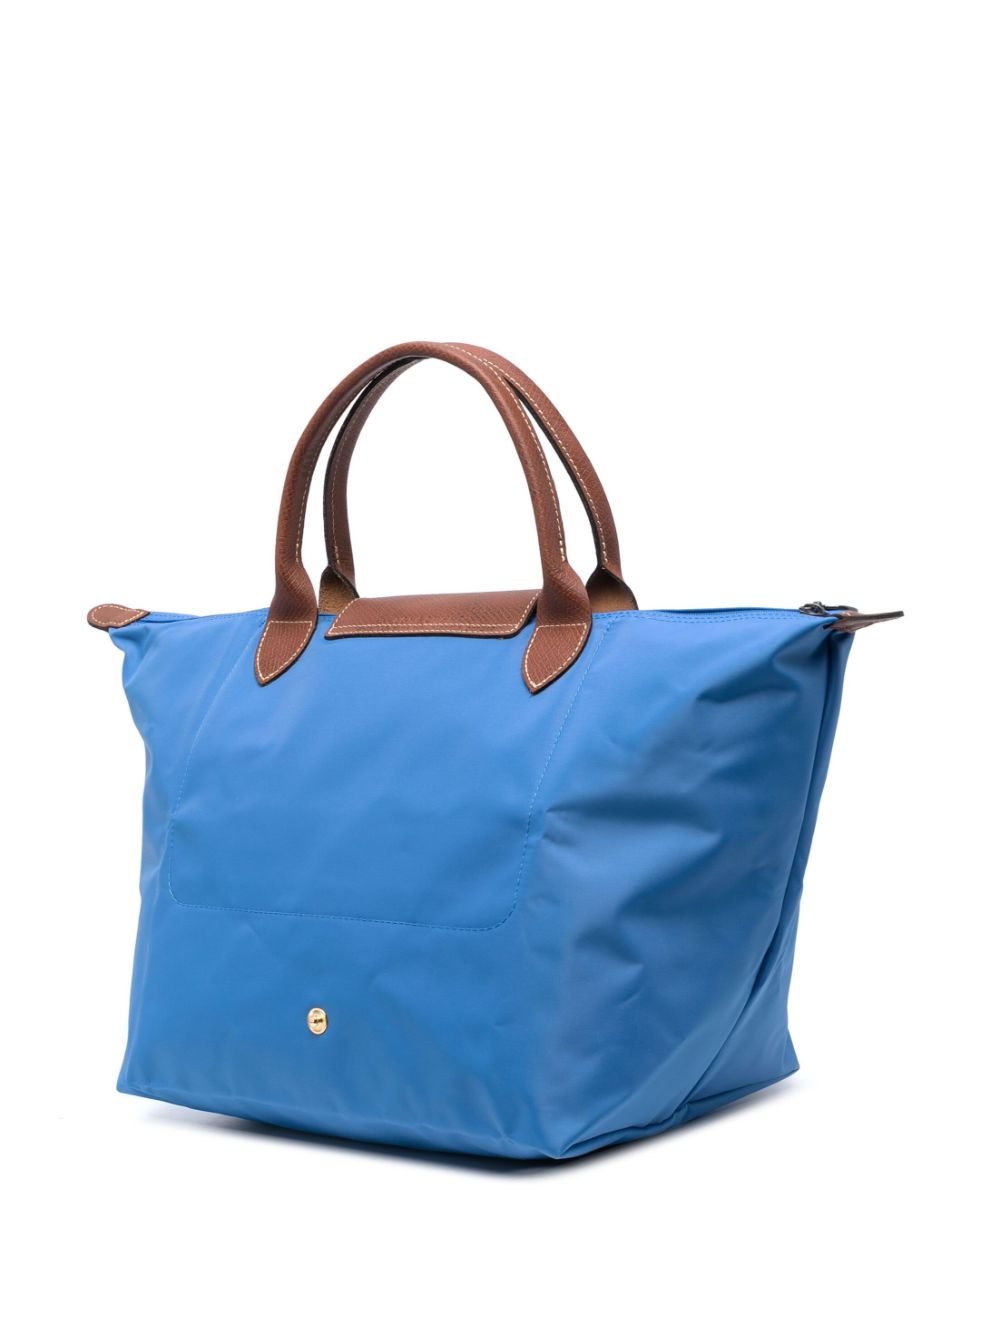 Longchamp Medium Le Pliage City Tote Bag - Farfetch